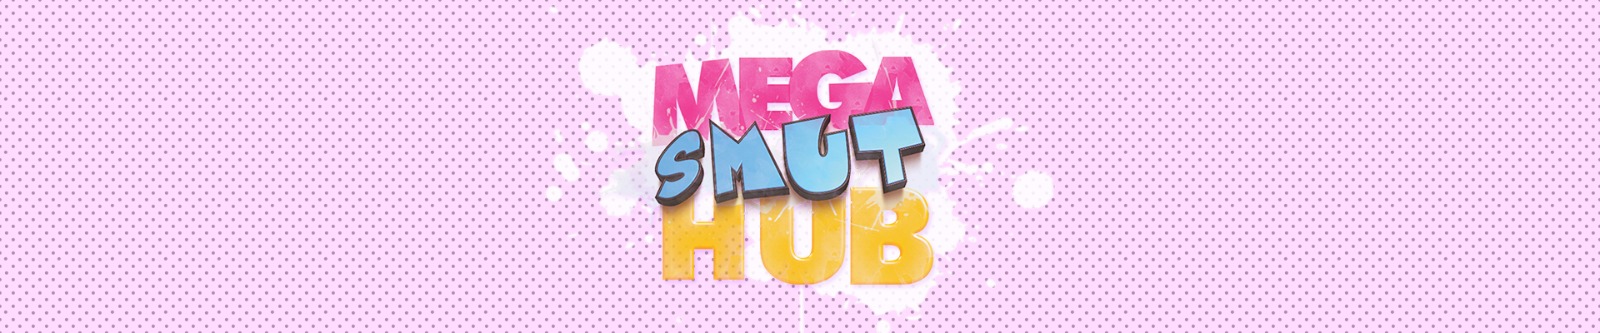 Mega Smut Hub